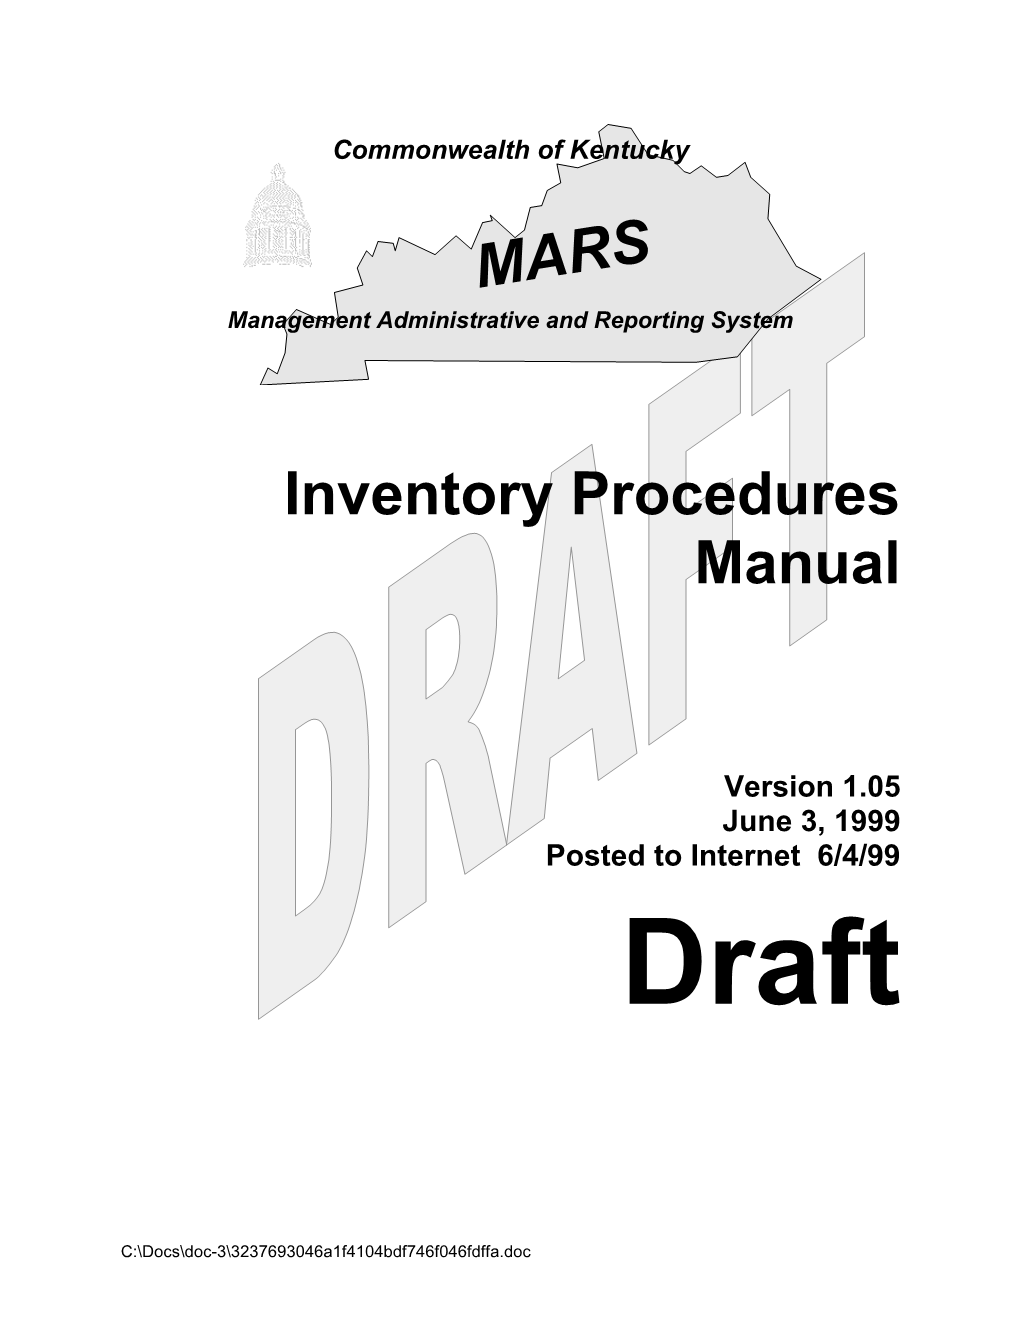 Inventory Procedures Manual